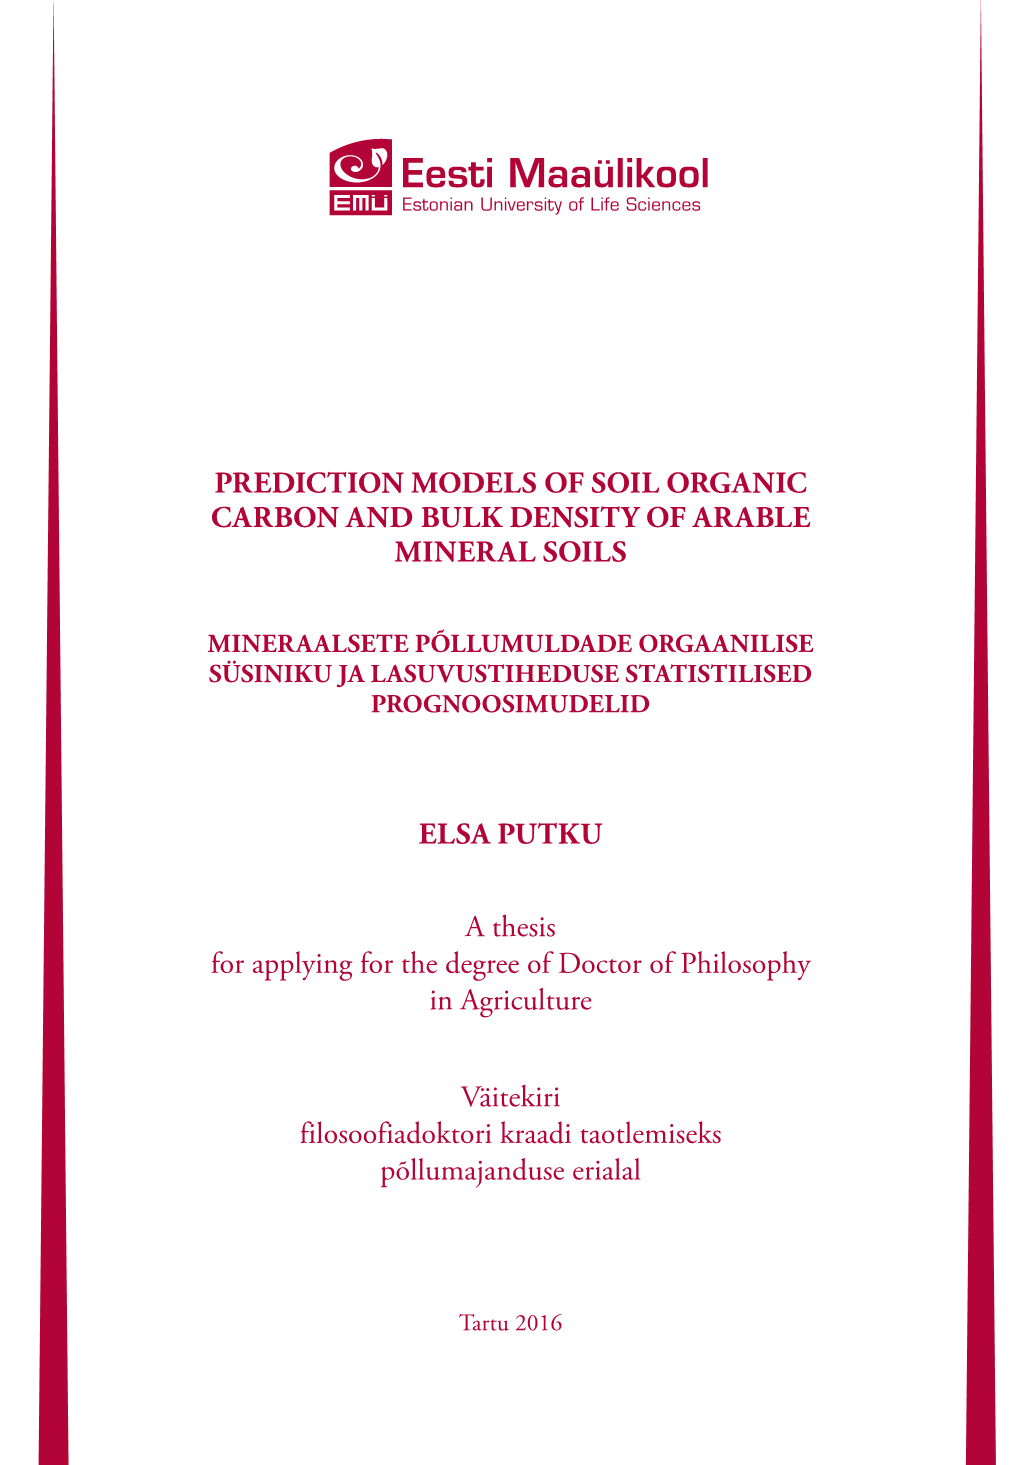 Prediction Models of Soil Organic Carbon and Bulk Density of Arable Mineral Soils